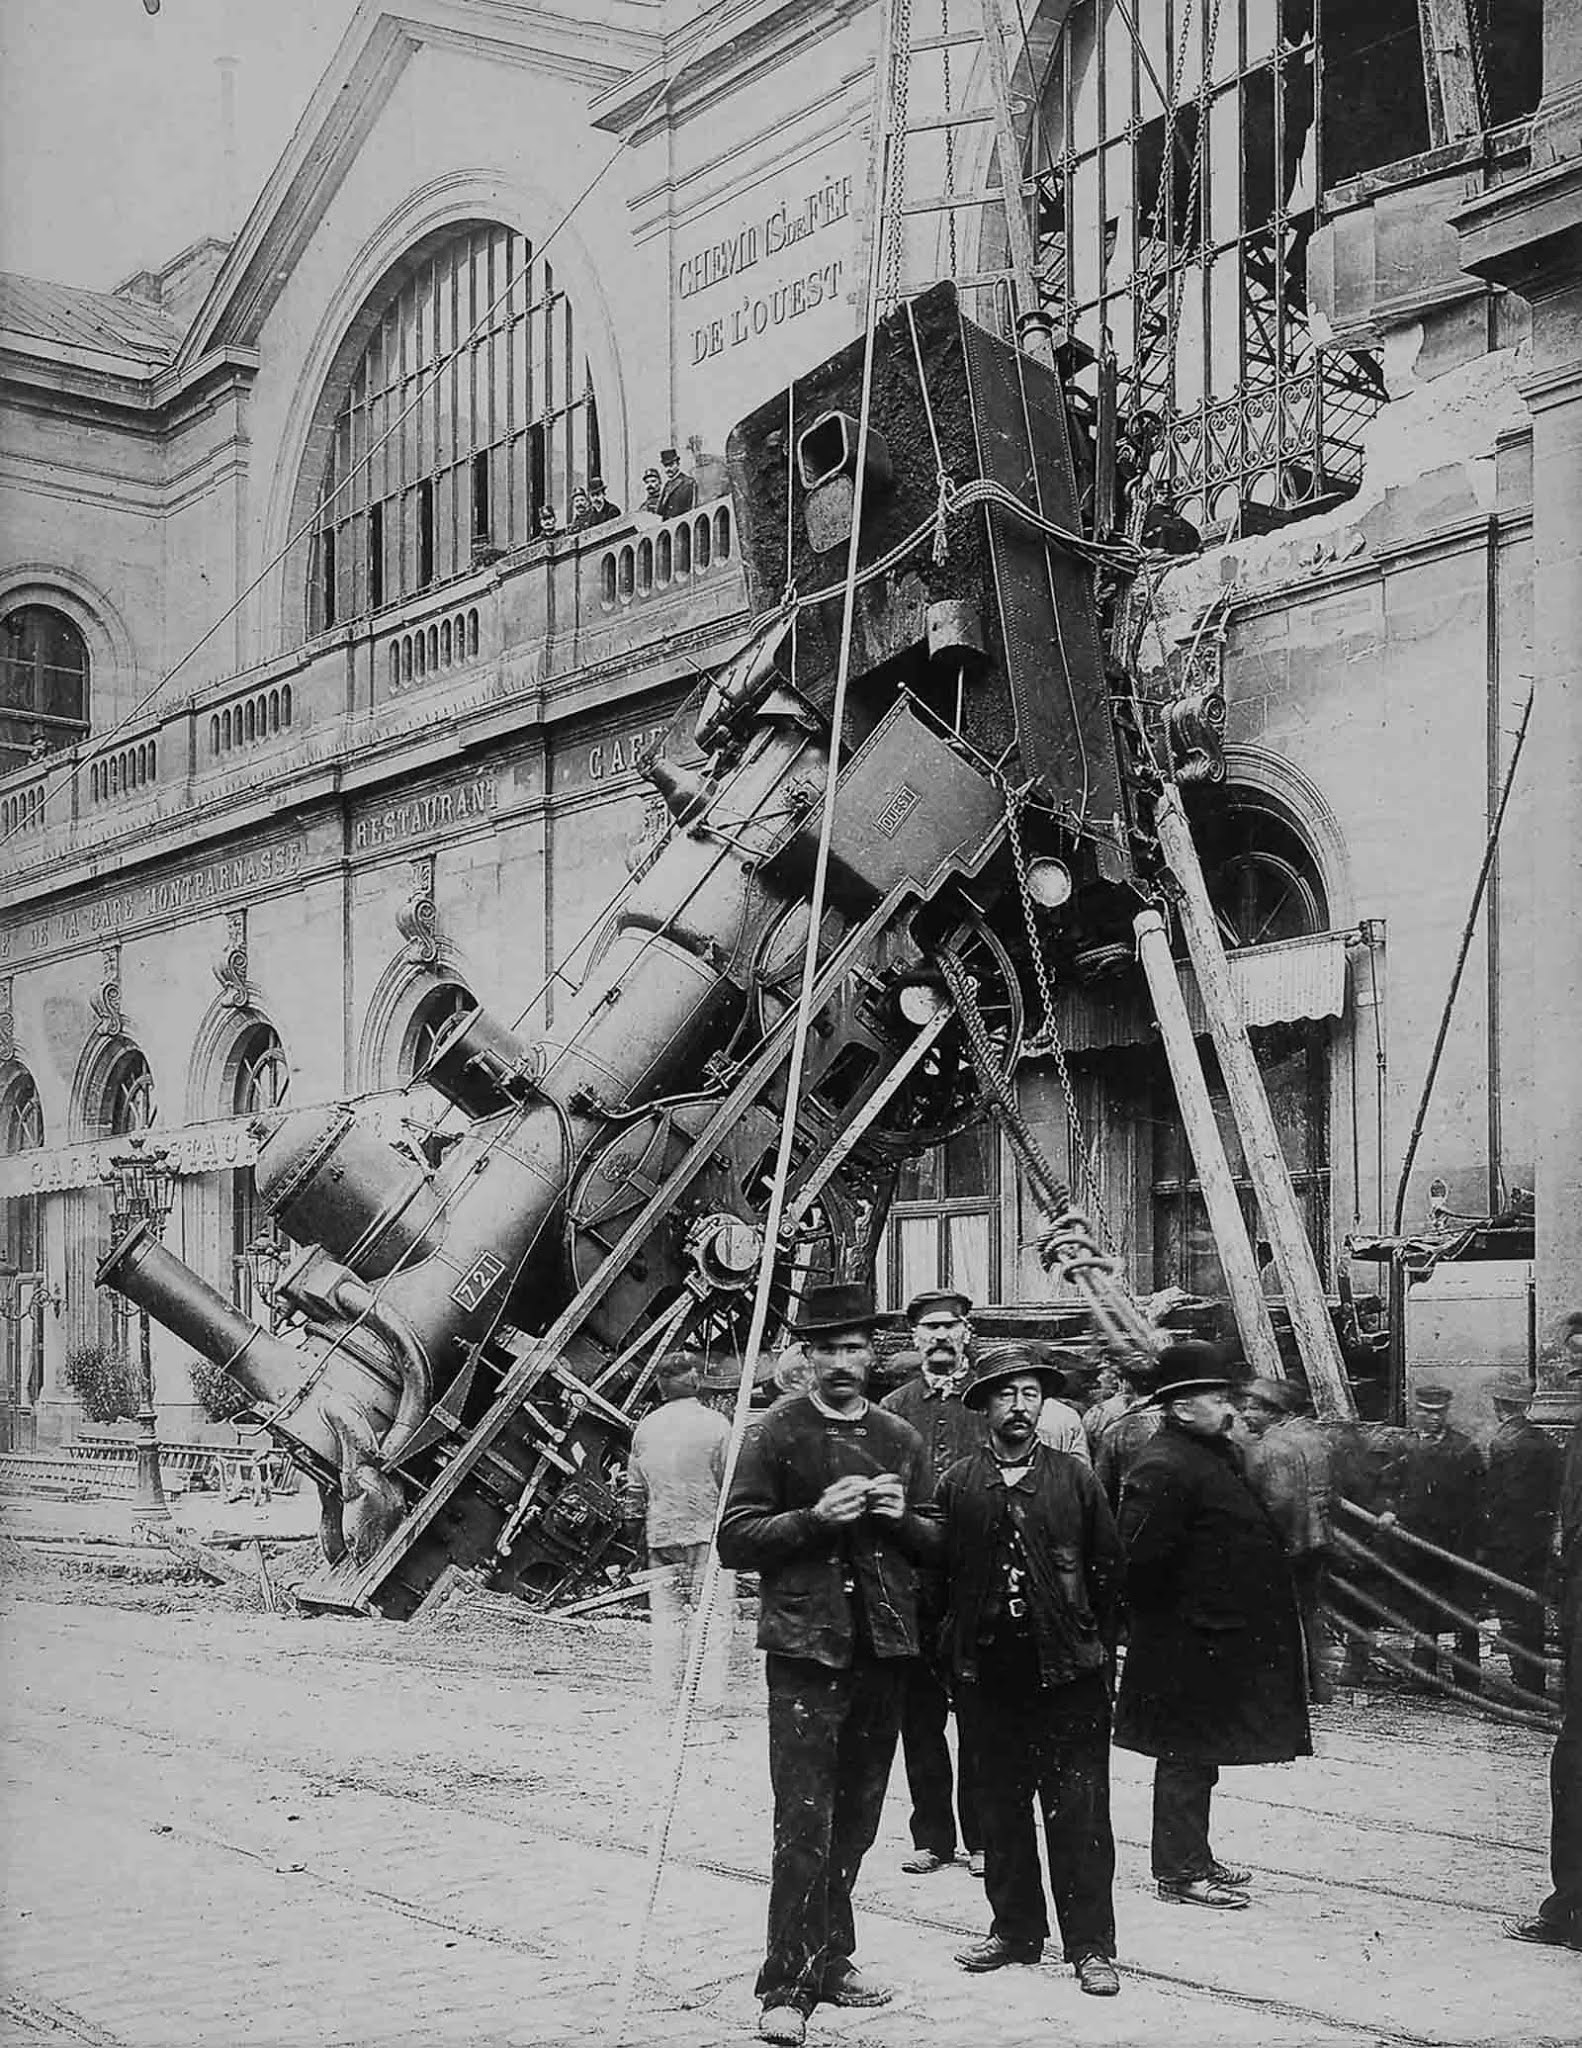 Montparnasse Train Wreck photos